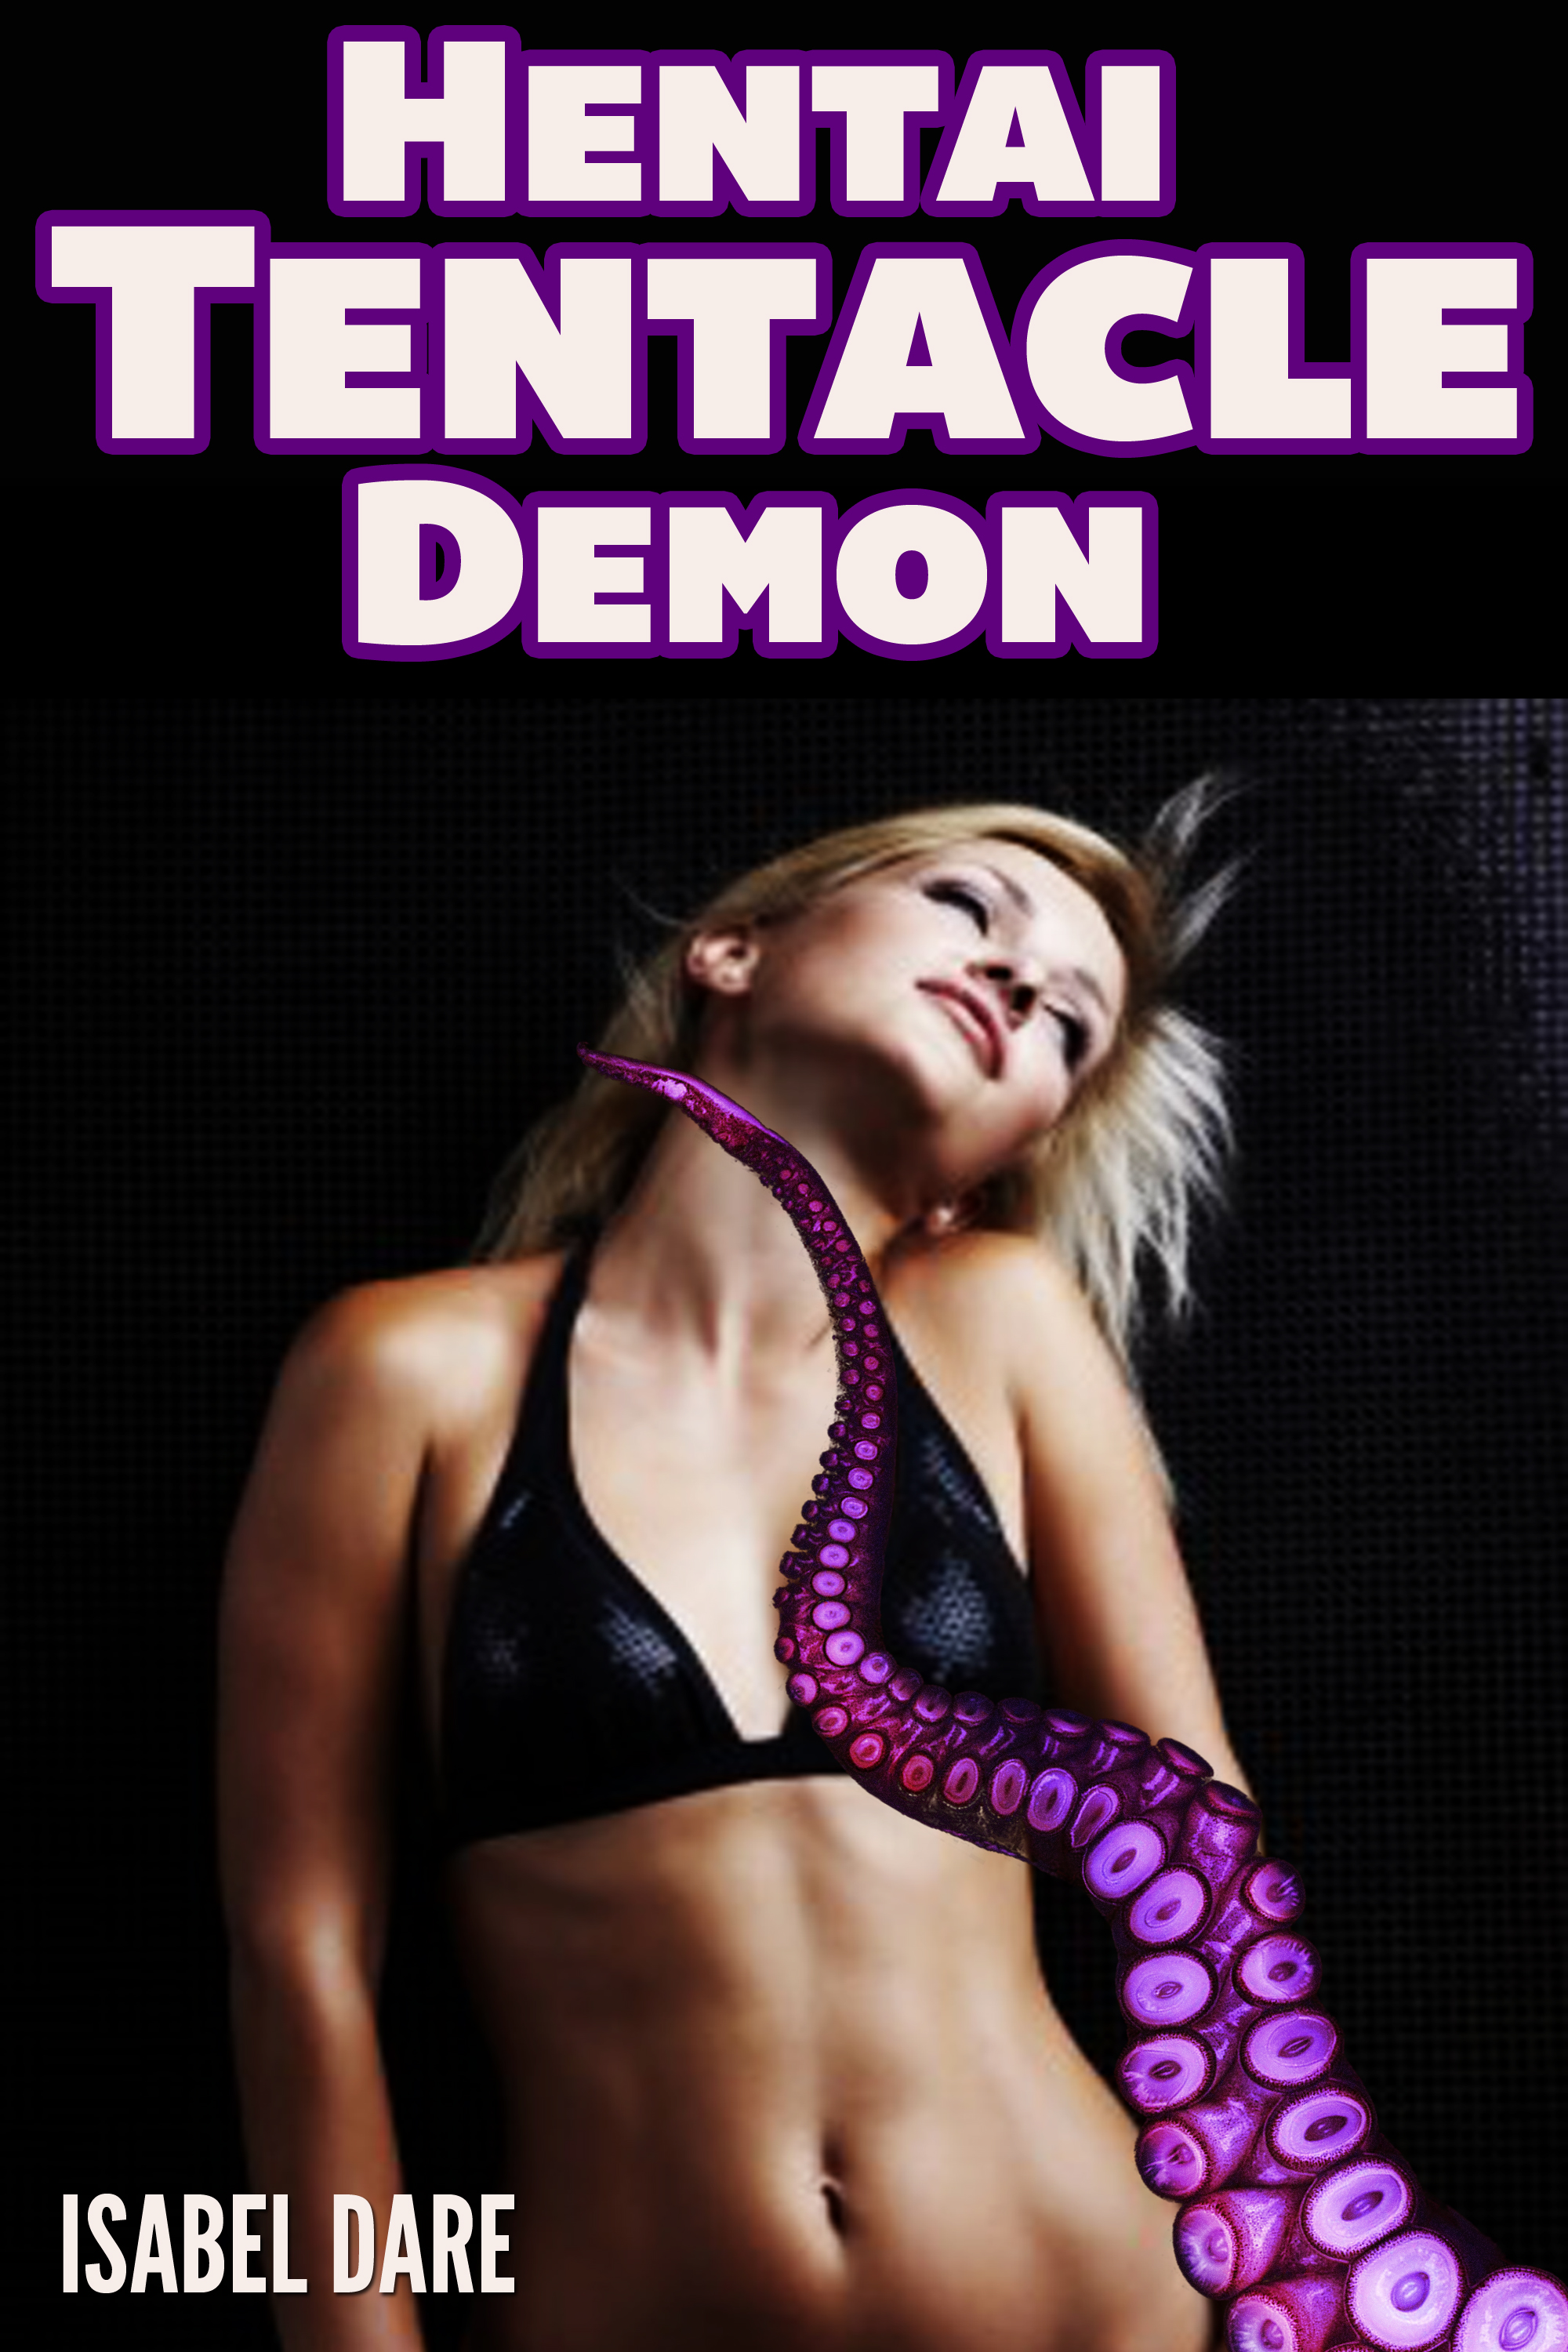 Hentai Monster Tentacle Porn - Hentai Tentacle Demon (Tentacle Monster Erotica), an Ebook by Isabel Dare